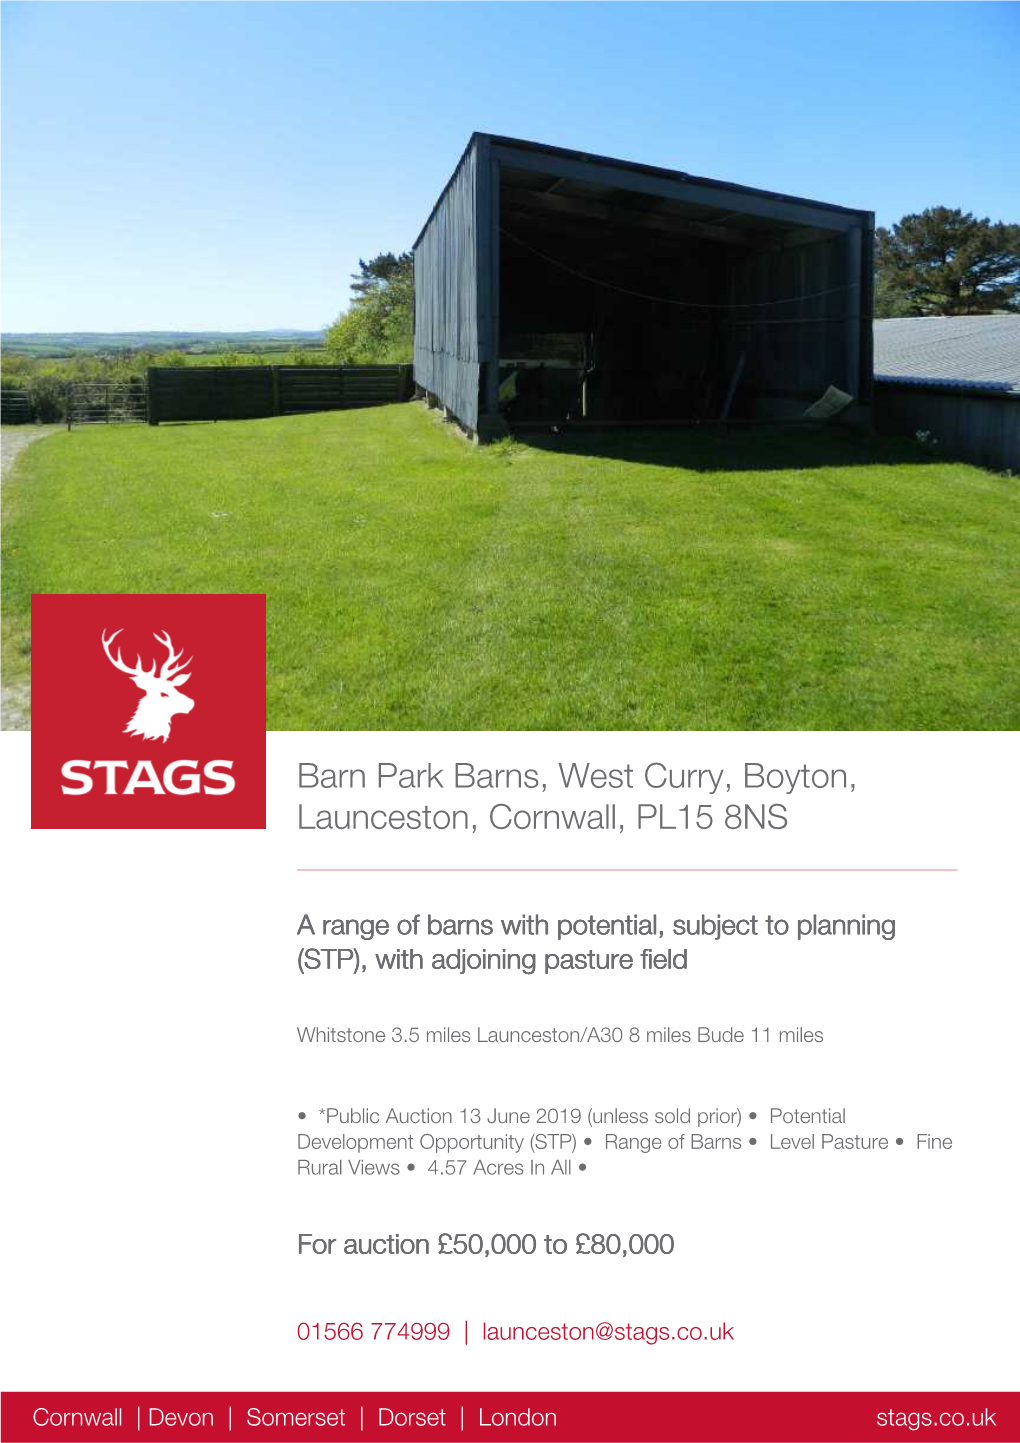 Barn Park Barns, West Curry, Boyton, Launceston, Cornwall, PL15 8NS